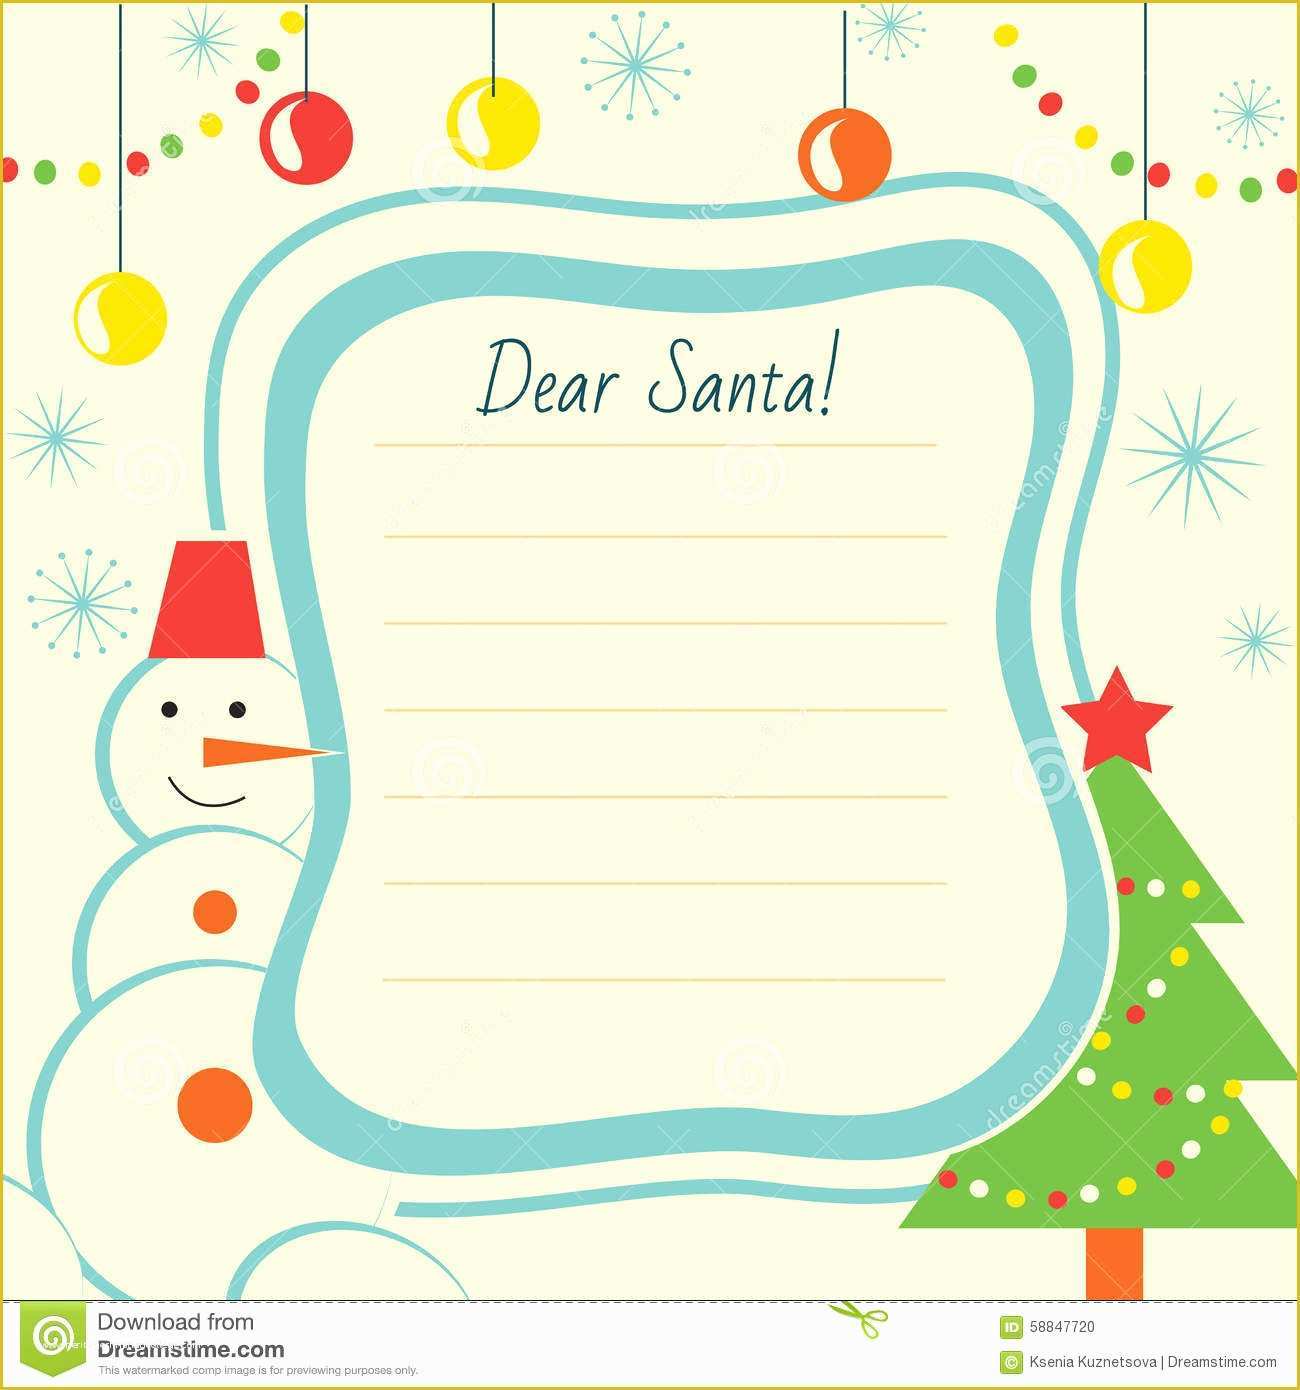 Christmas Newsletter Templates Free Printable Of Santa Claus to Print Christmas Printables